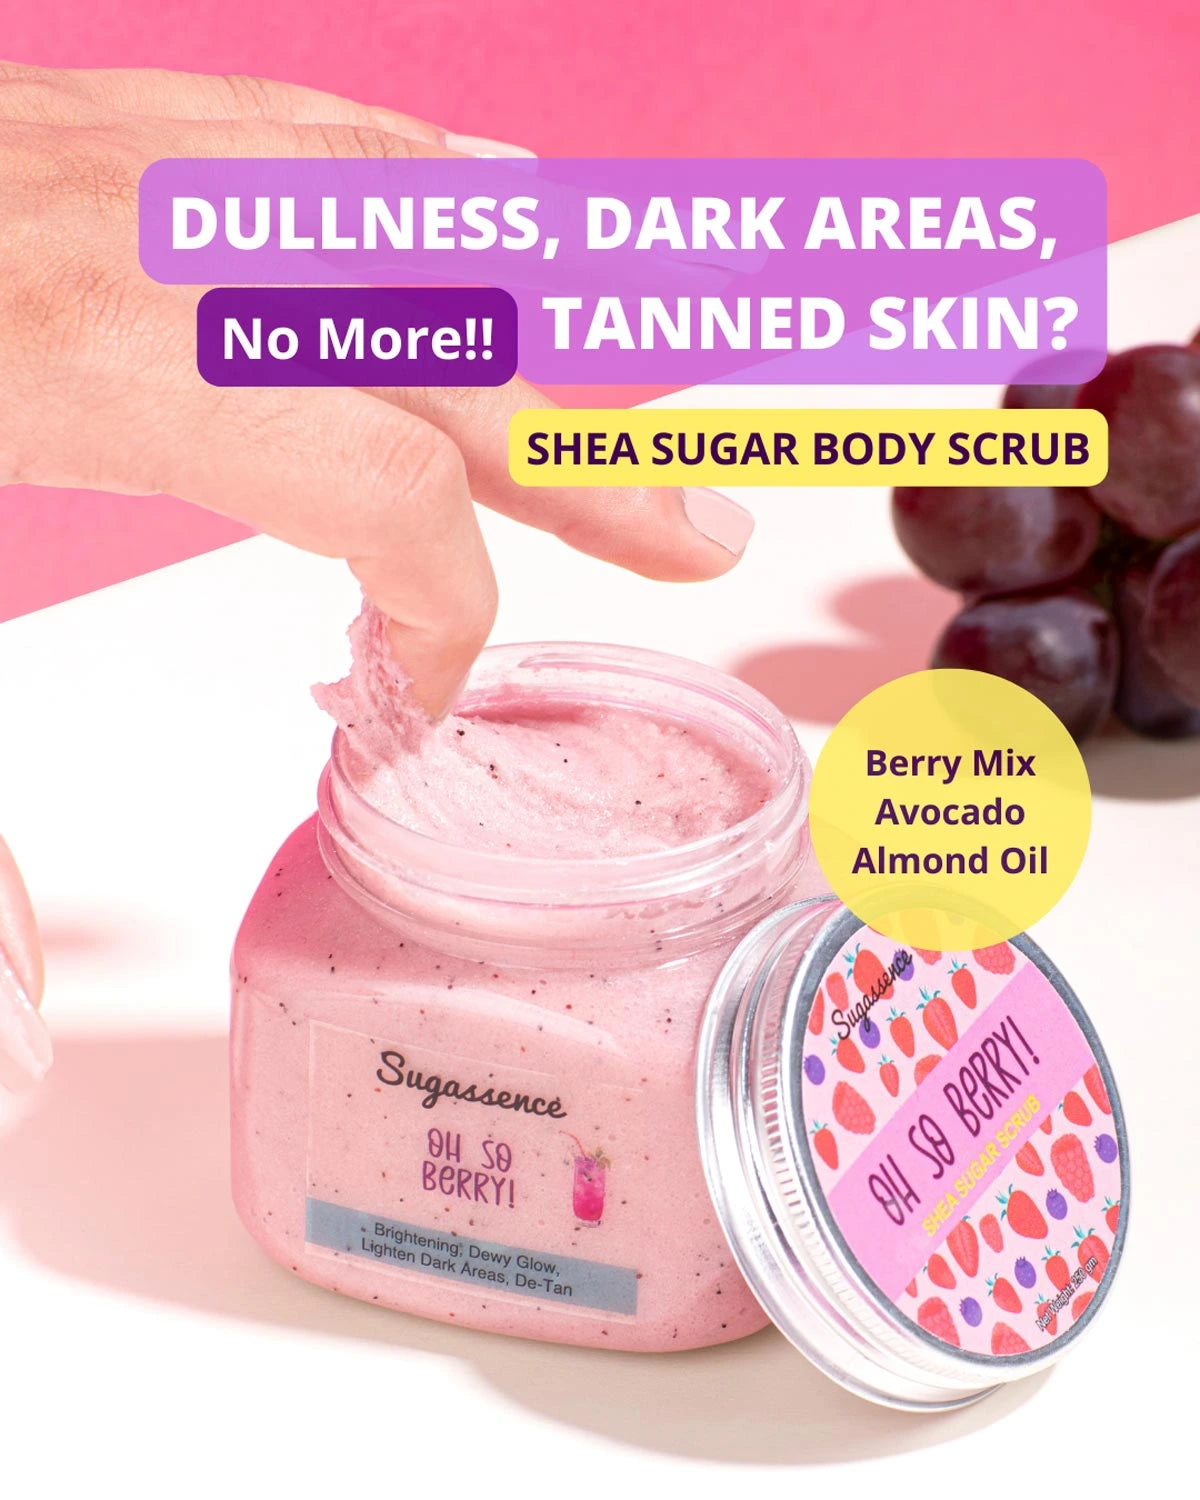 Oh So Berry! – Shea Sugar Scrub